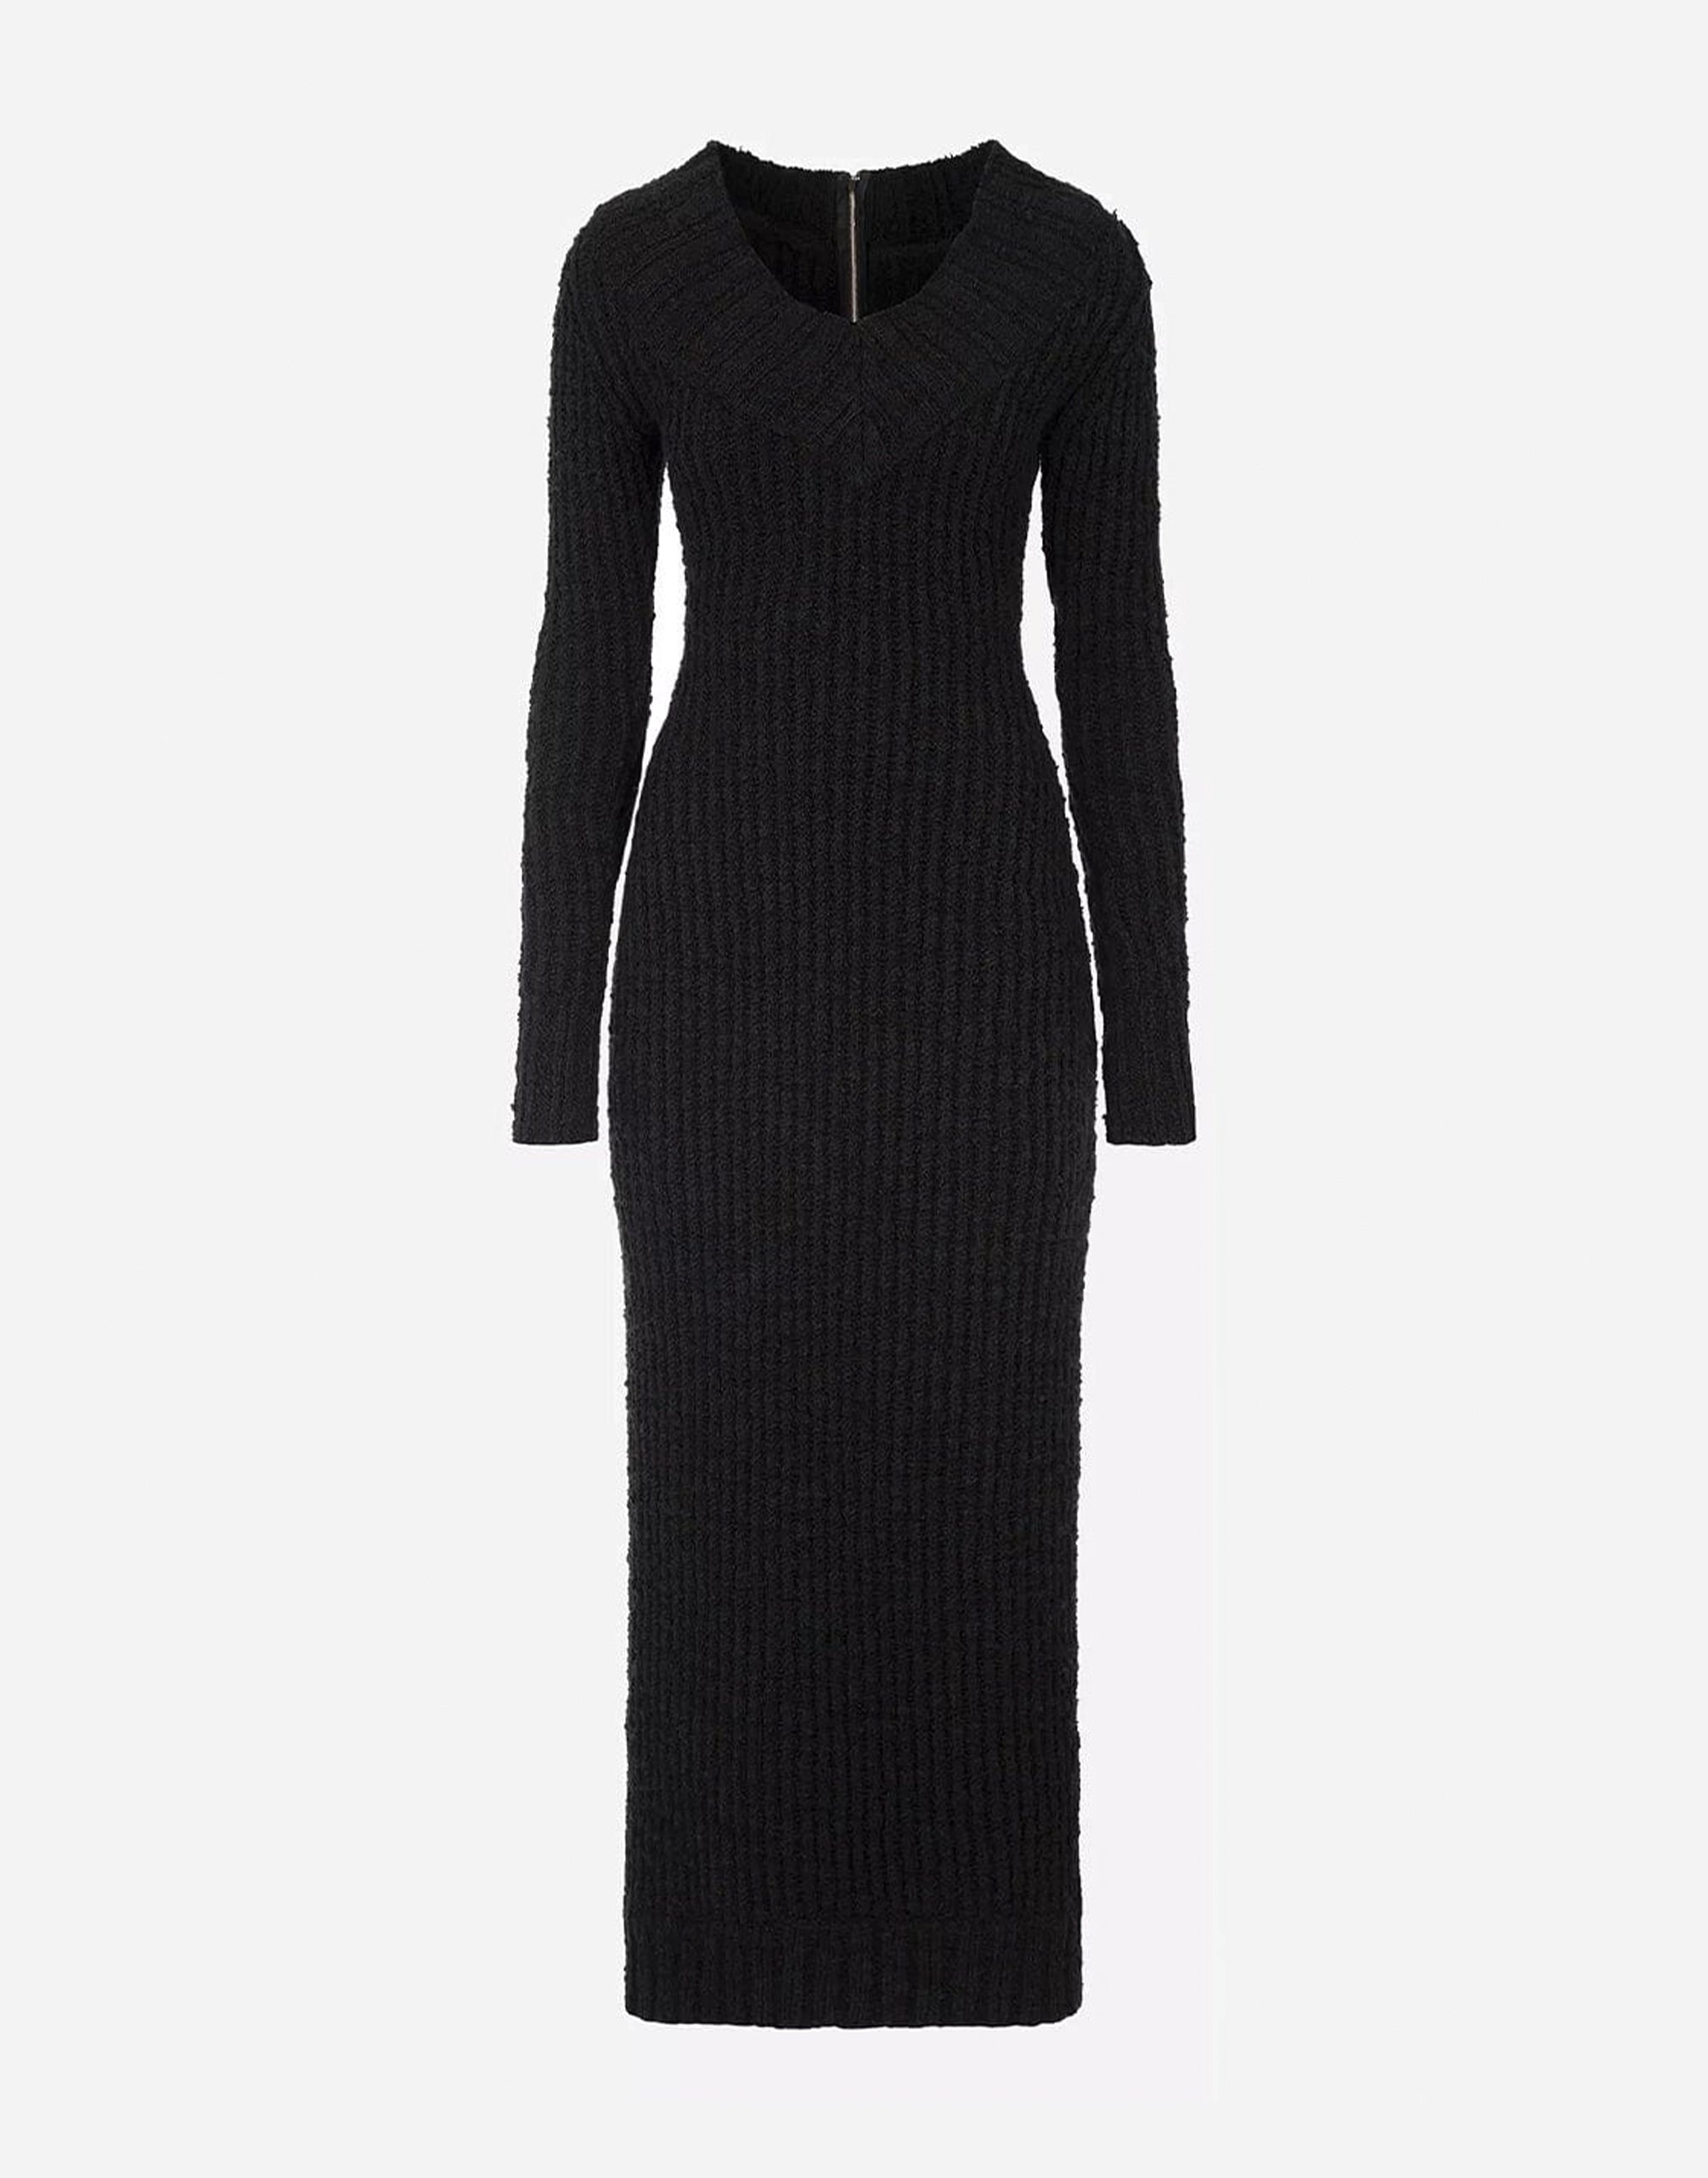 Dolce & Gabbana Long-Sleeved Knit Dress